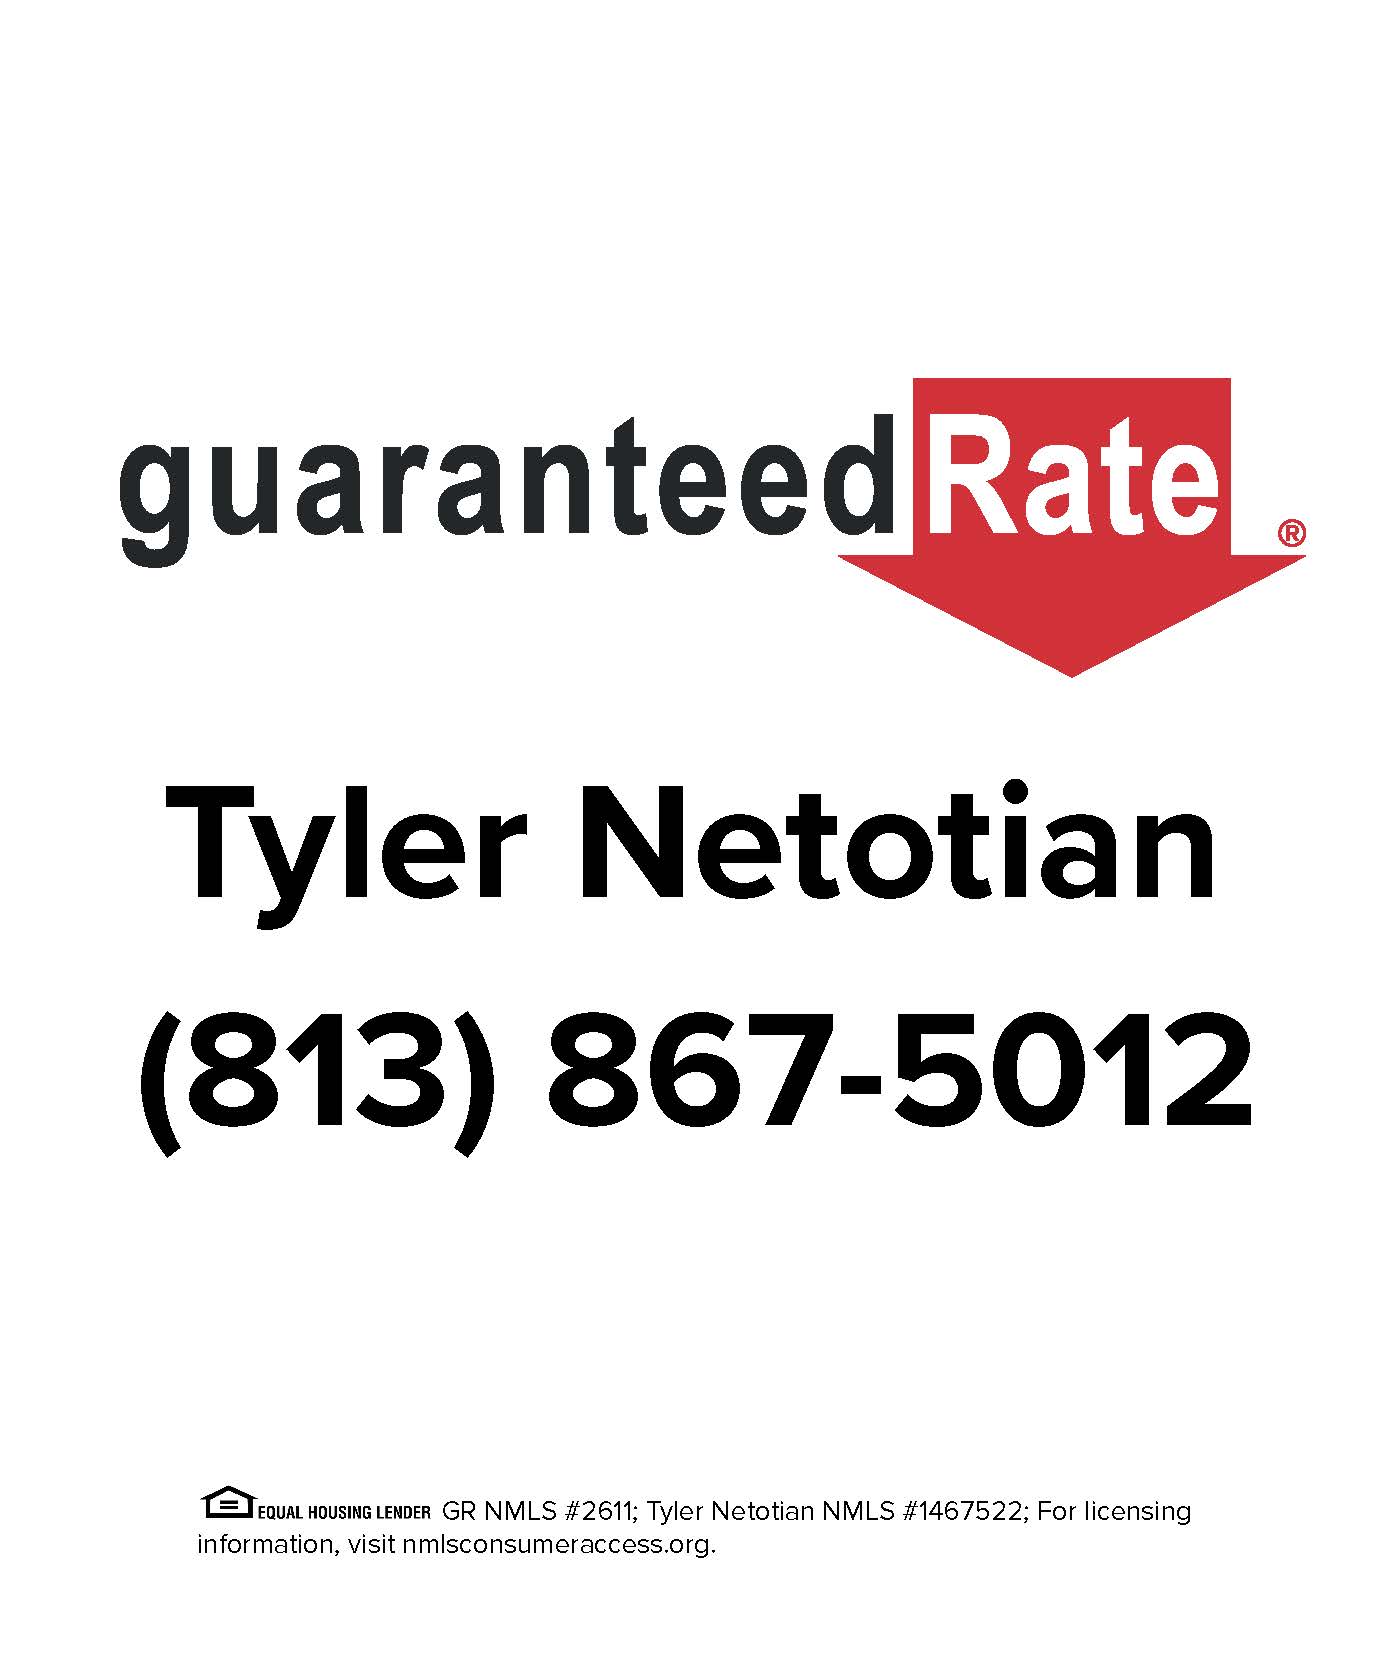 Guarantee Rate Website Ad